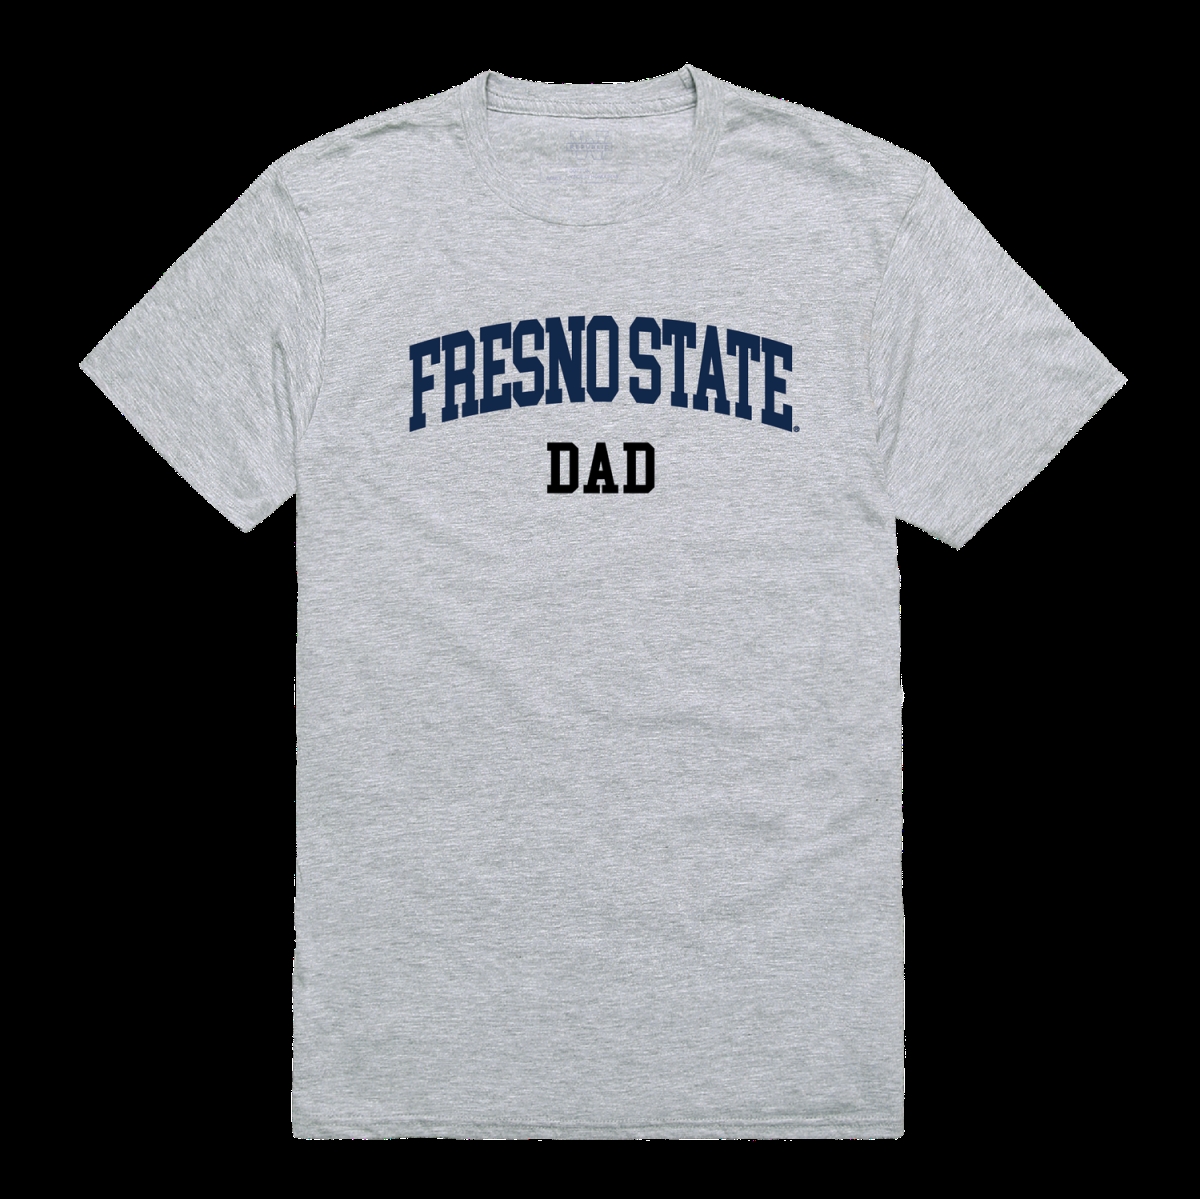 548-169-HG2-02 California State University, Fresno Bulldogs College Dad T-Shirt, Heather Grey - Medium -  W Republic